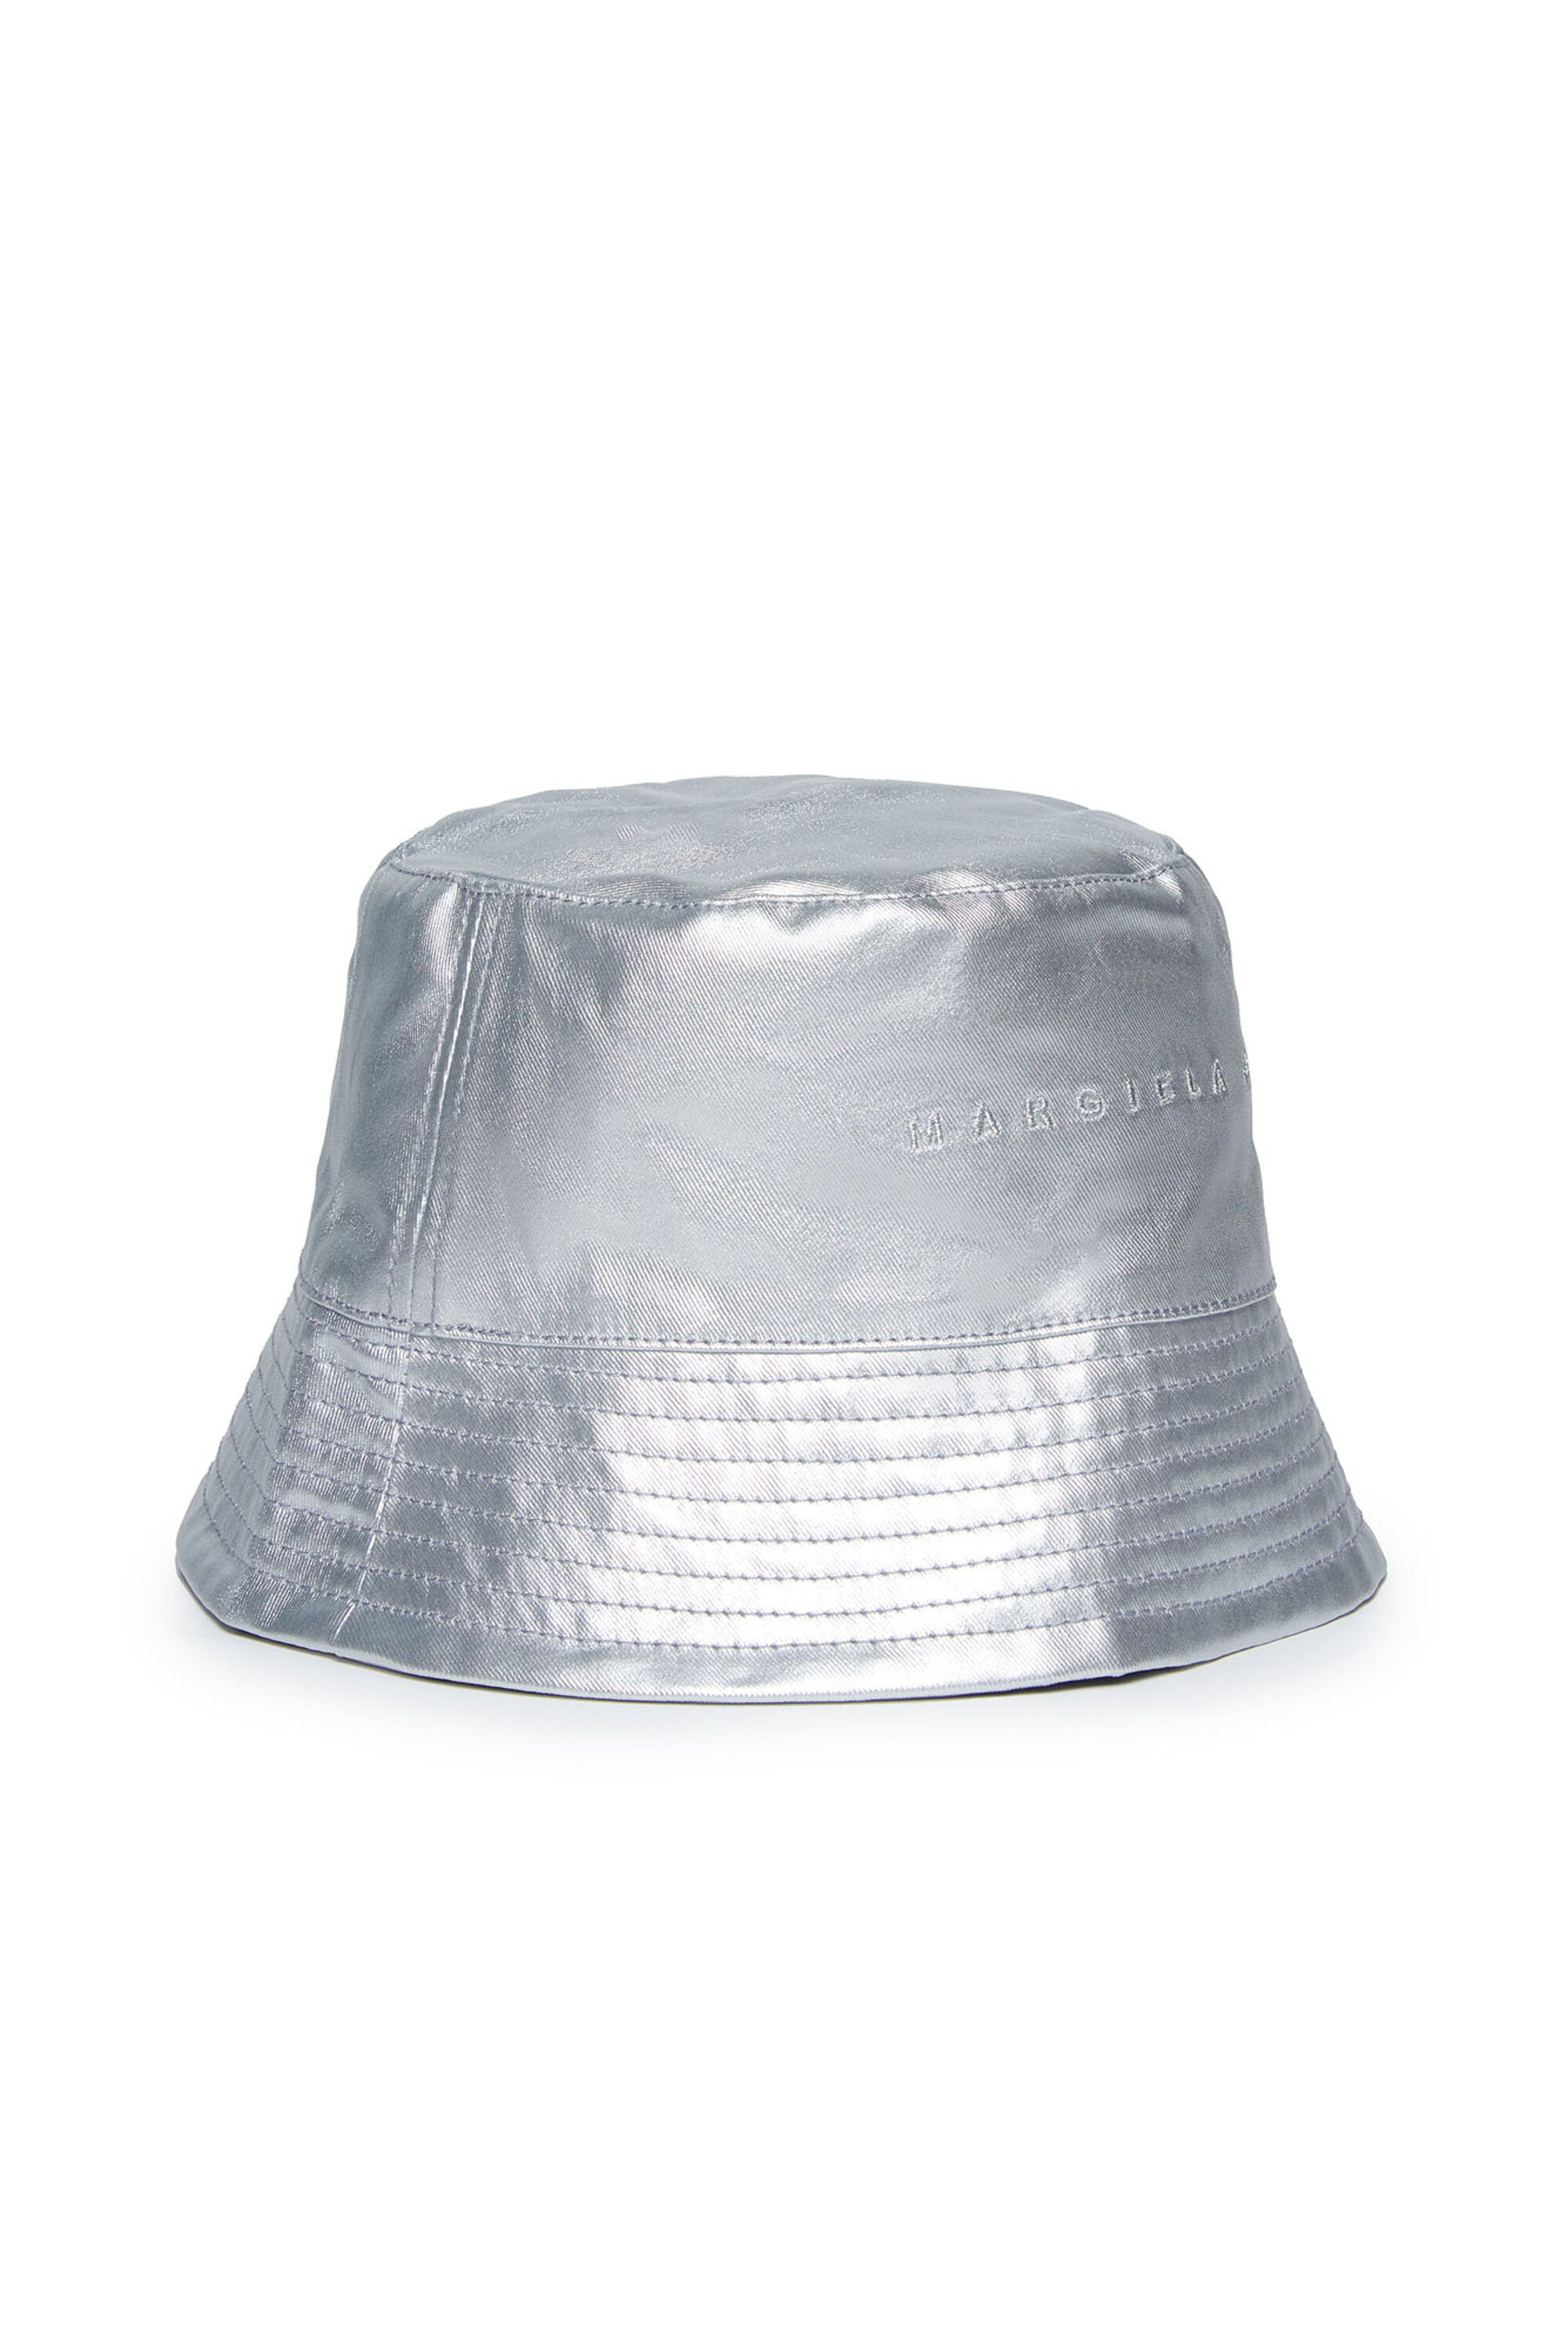 Sombrero de pescador efecto metálico